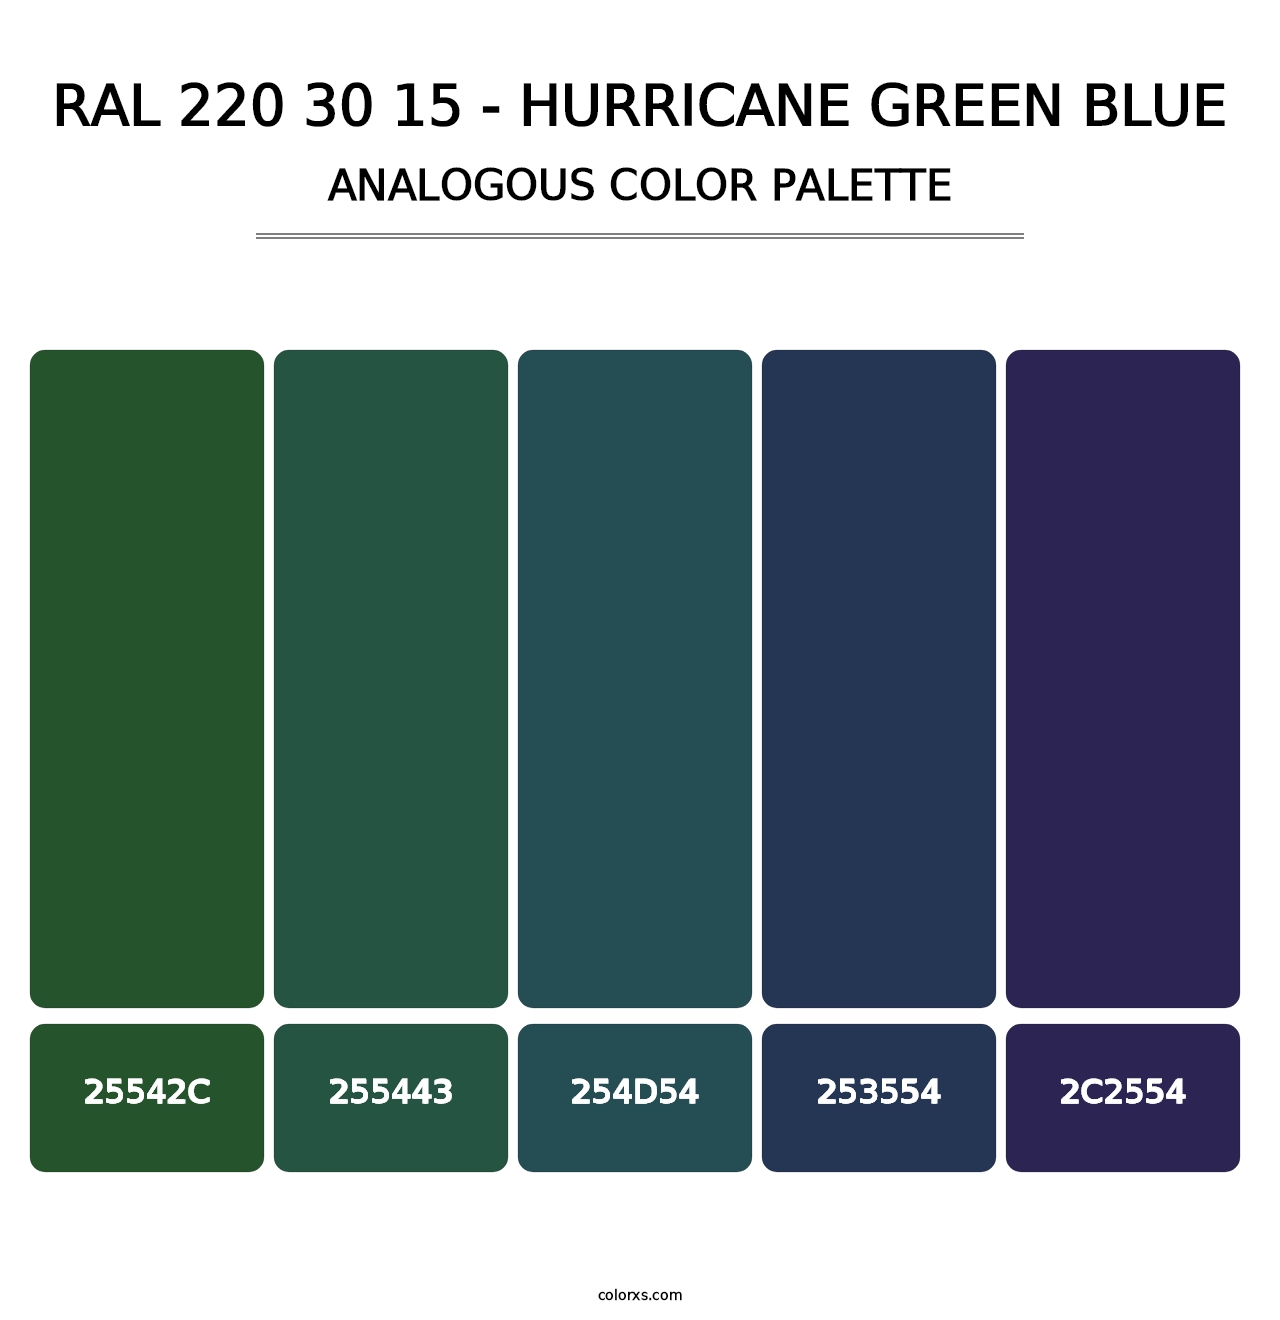 RAL 220 30 15 - Hurricane Green Blue - Analogous Color Palette